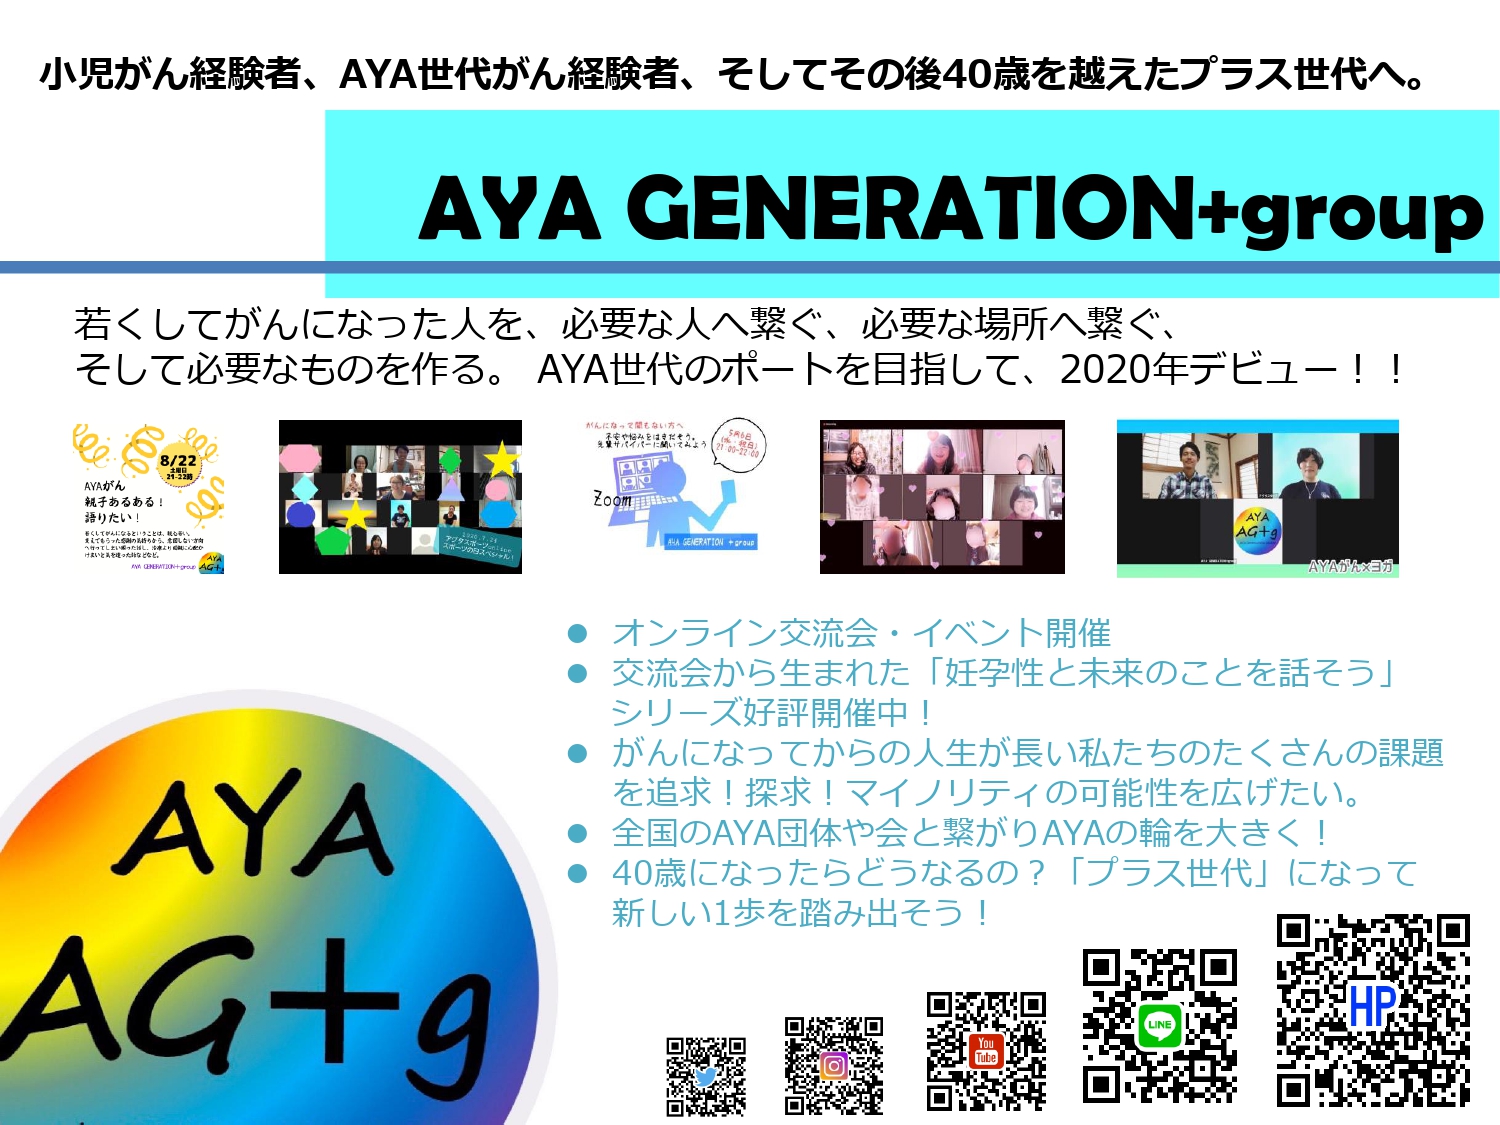 AYA GENERATION+group